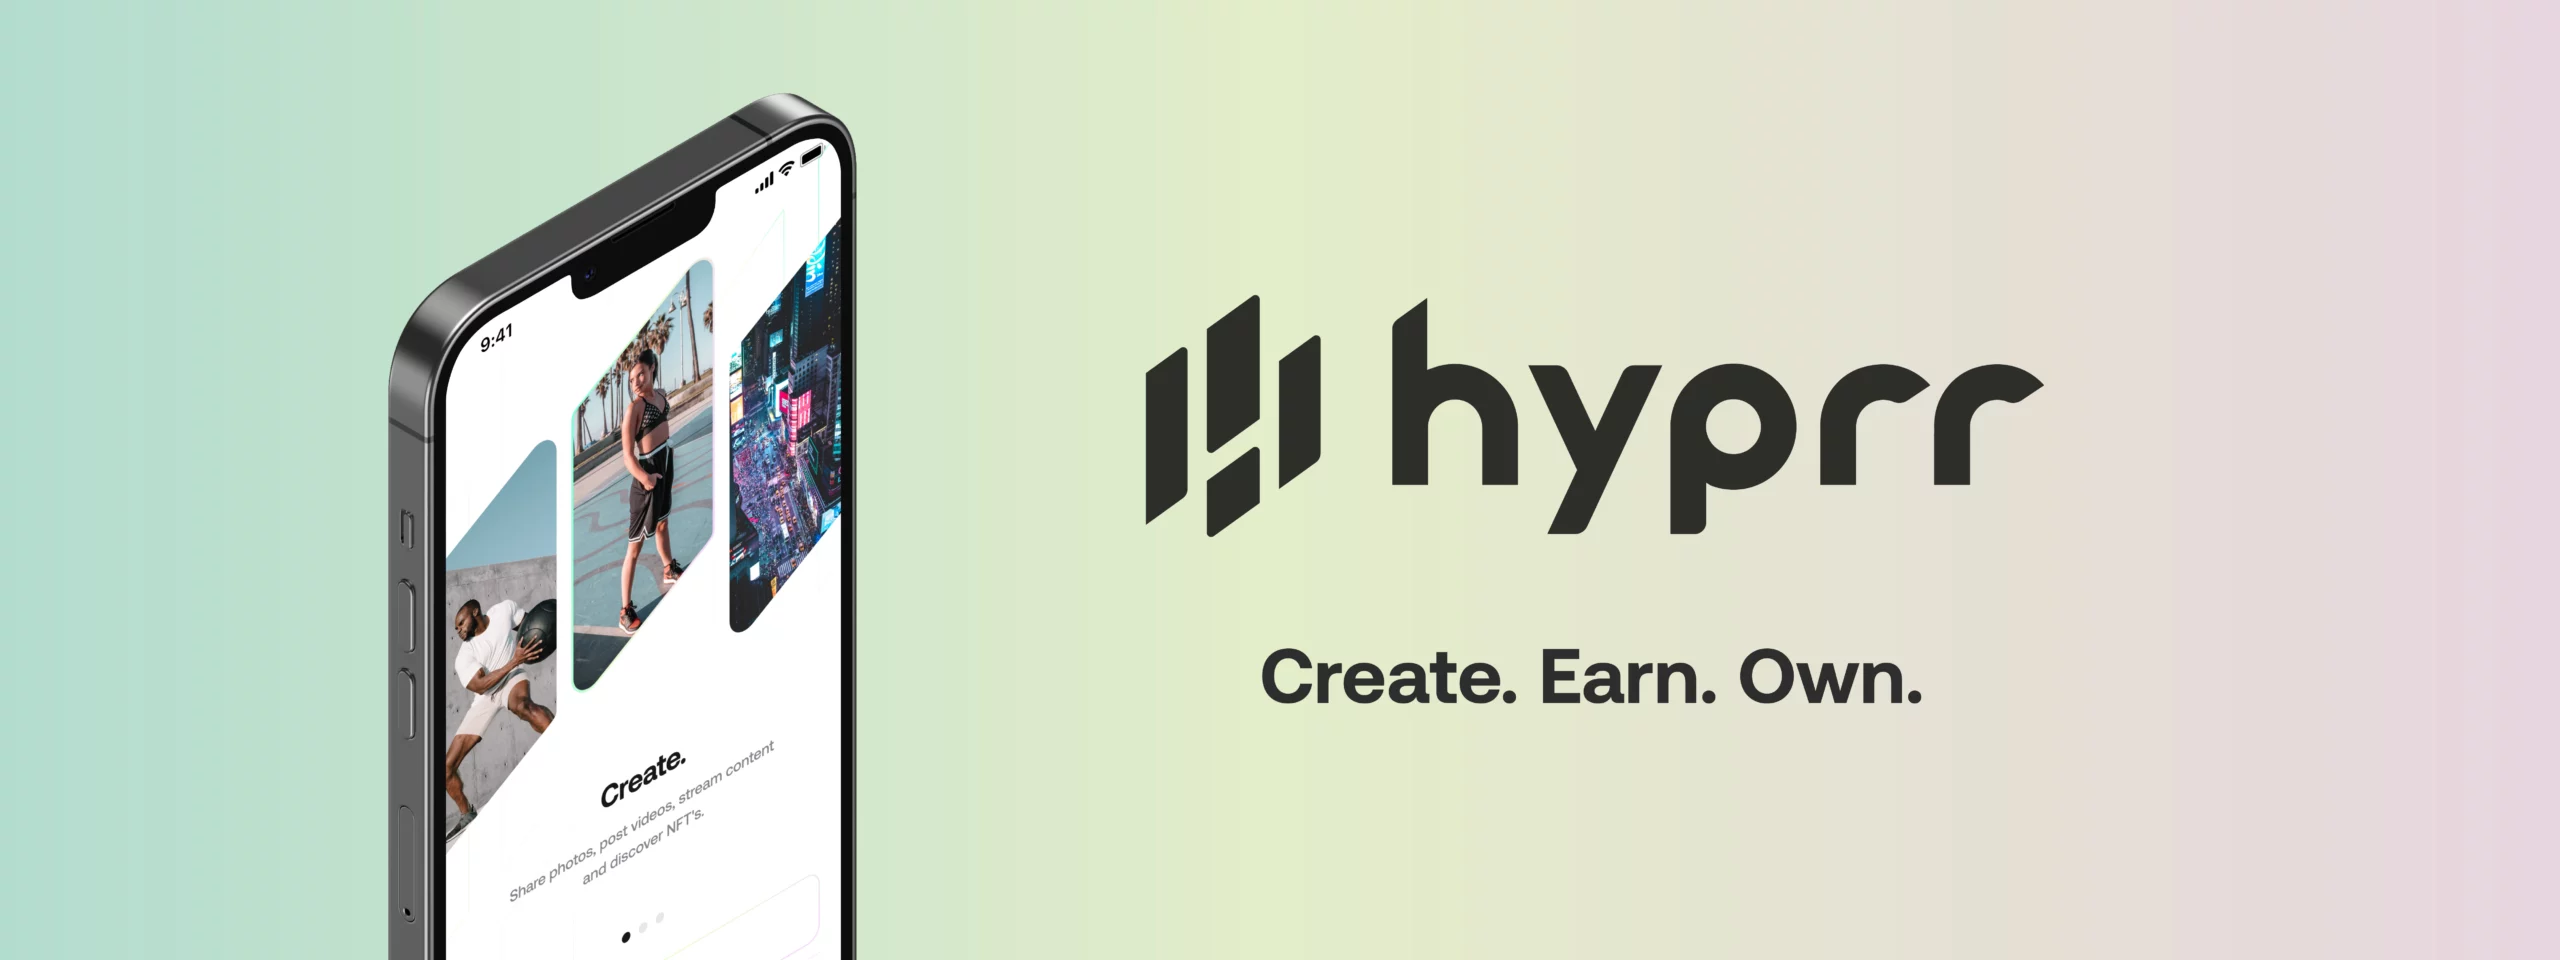 hyprr logo scaled